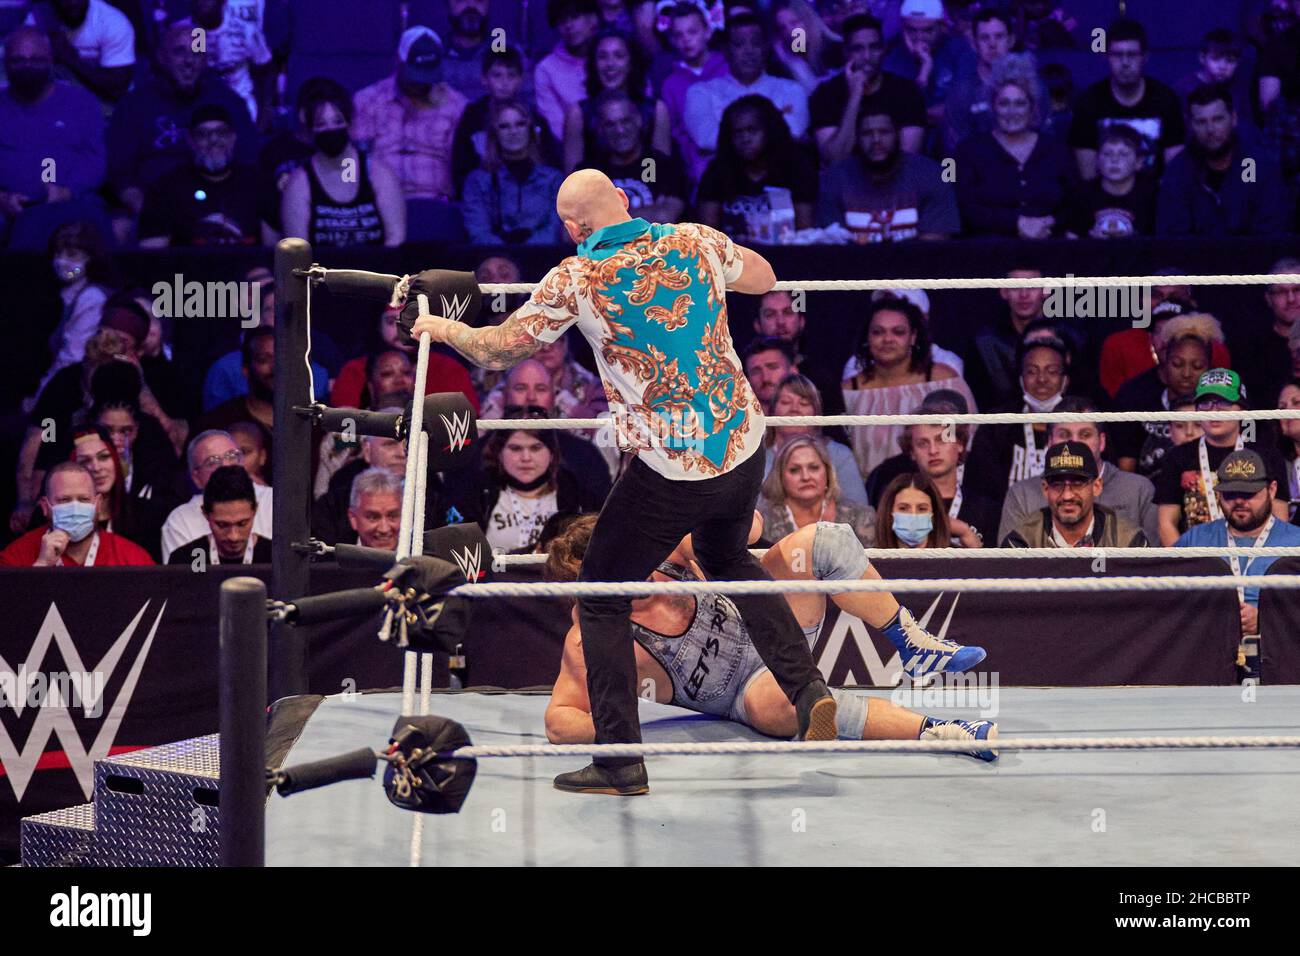 Tampa, Florida, USA. 26th Dec. 2021. Rick Boogs vs Happy Corbin during WWE fight at Amalie Arena. Credit: Yaroslav Sabitov/YES Market Media/Alamy Live News Stock Photo